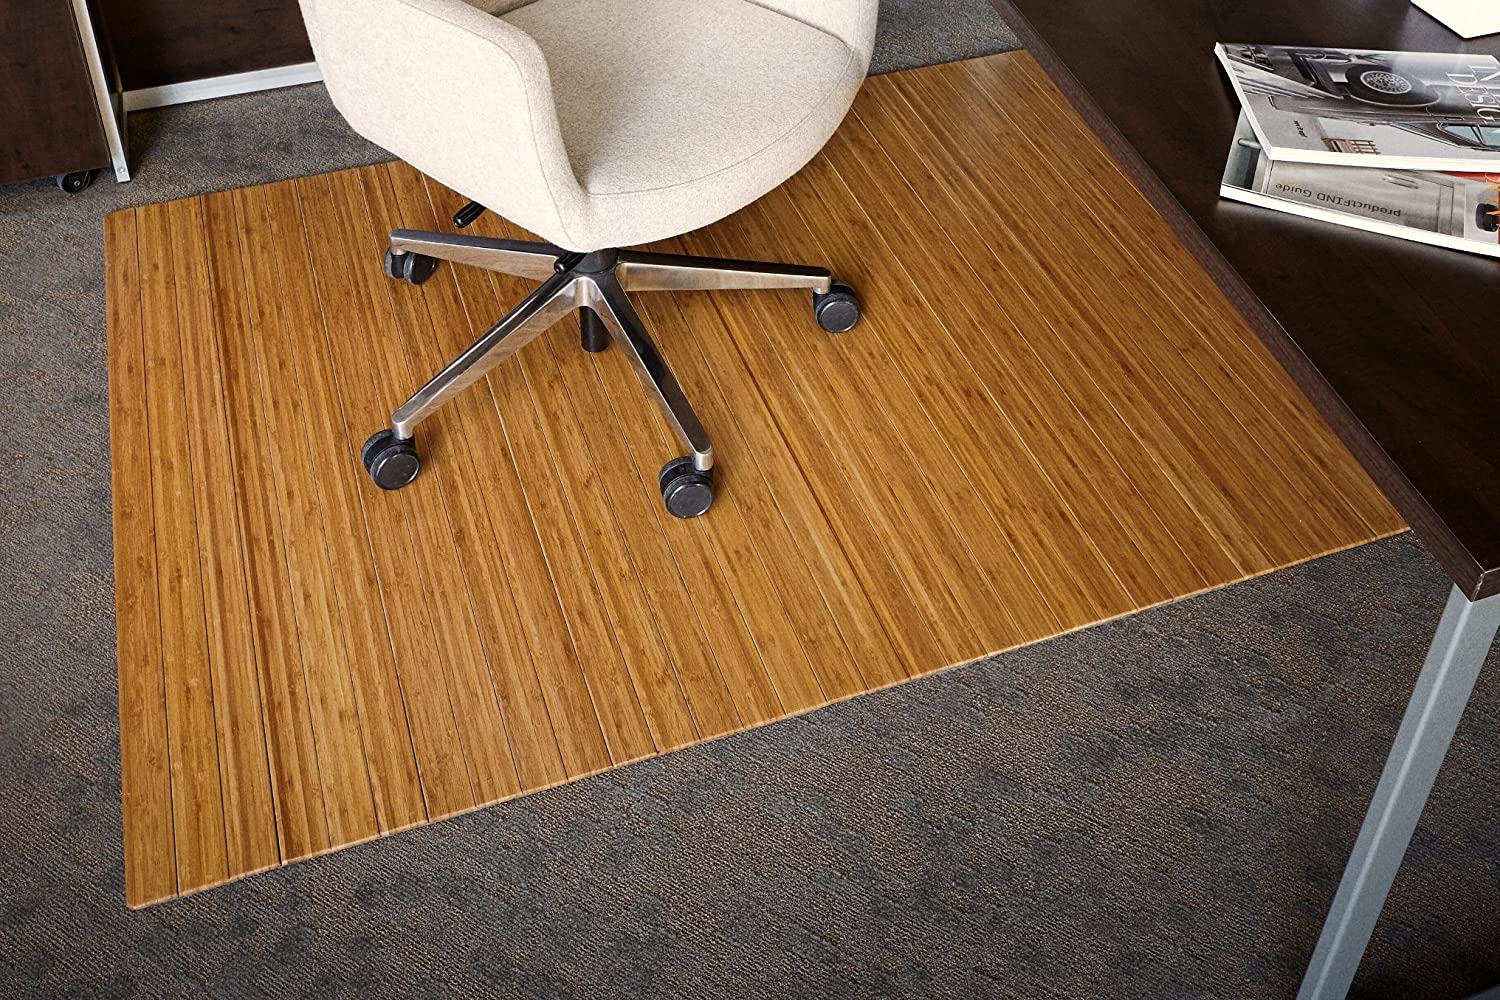 Floor mats for office